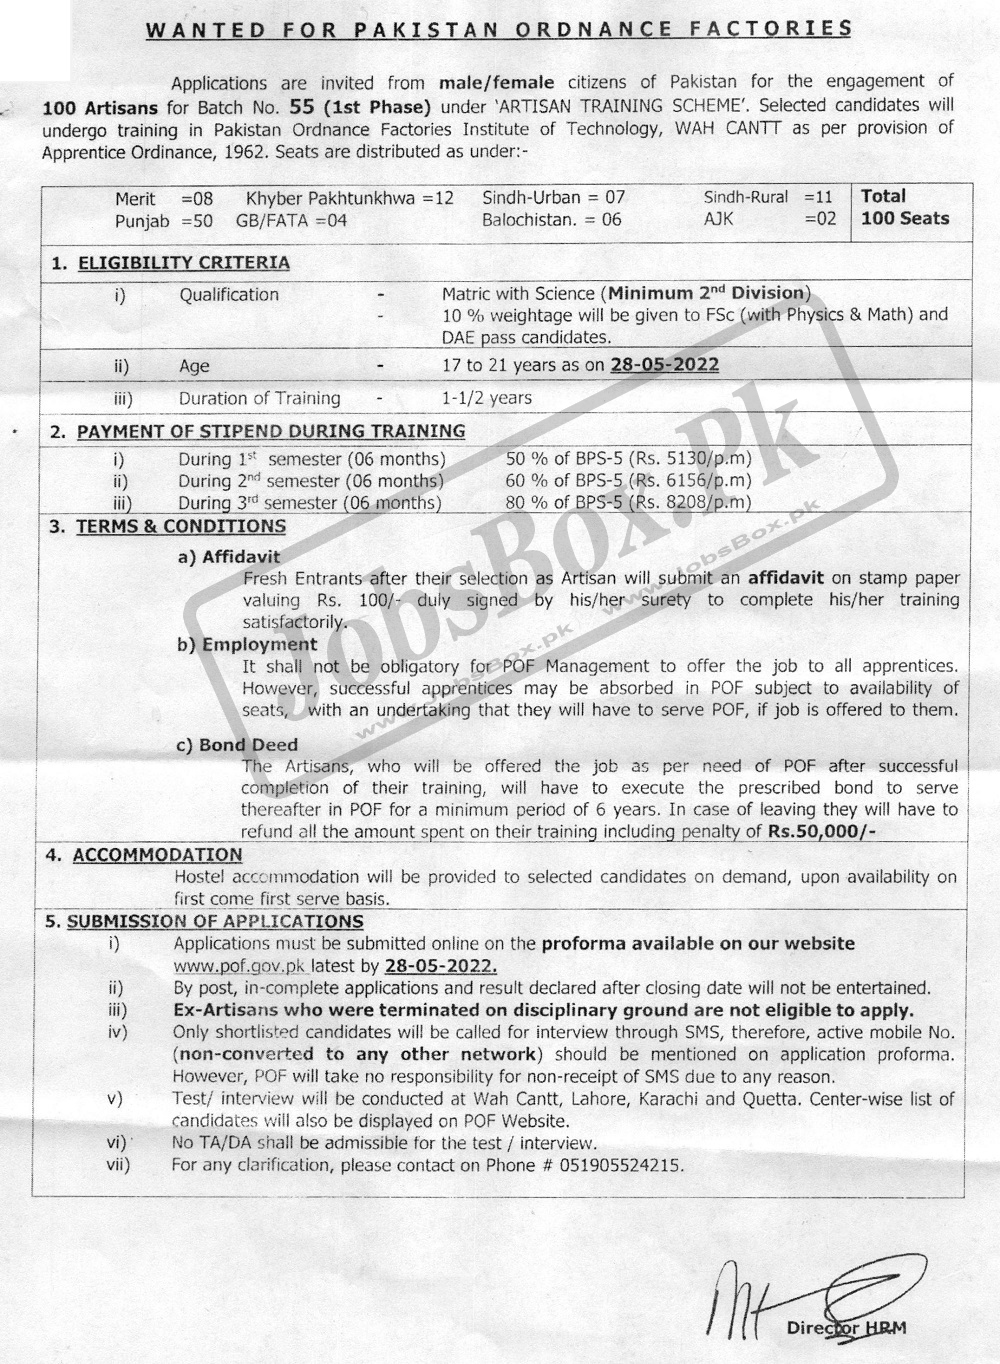 Pakistan Ordnance Factories POF Jobs 2022 for Artisan | www.pof.gov.pk